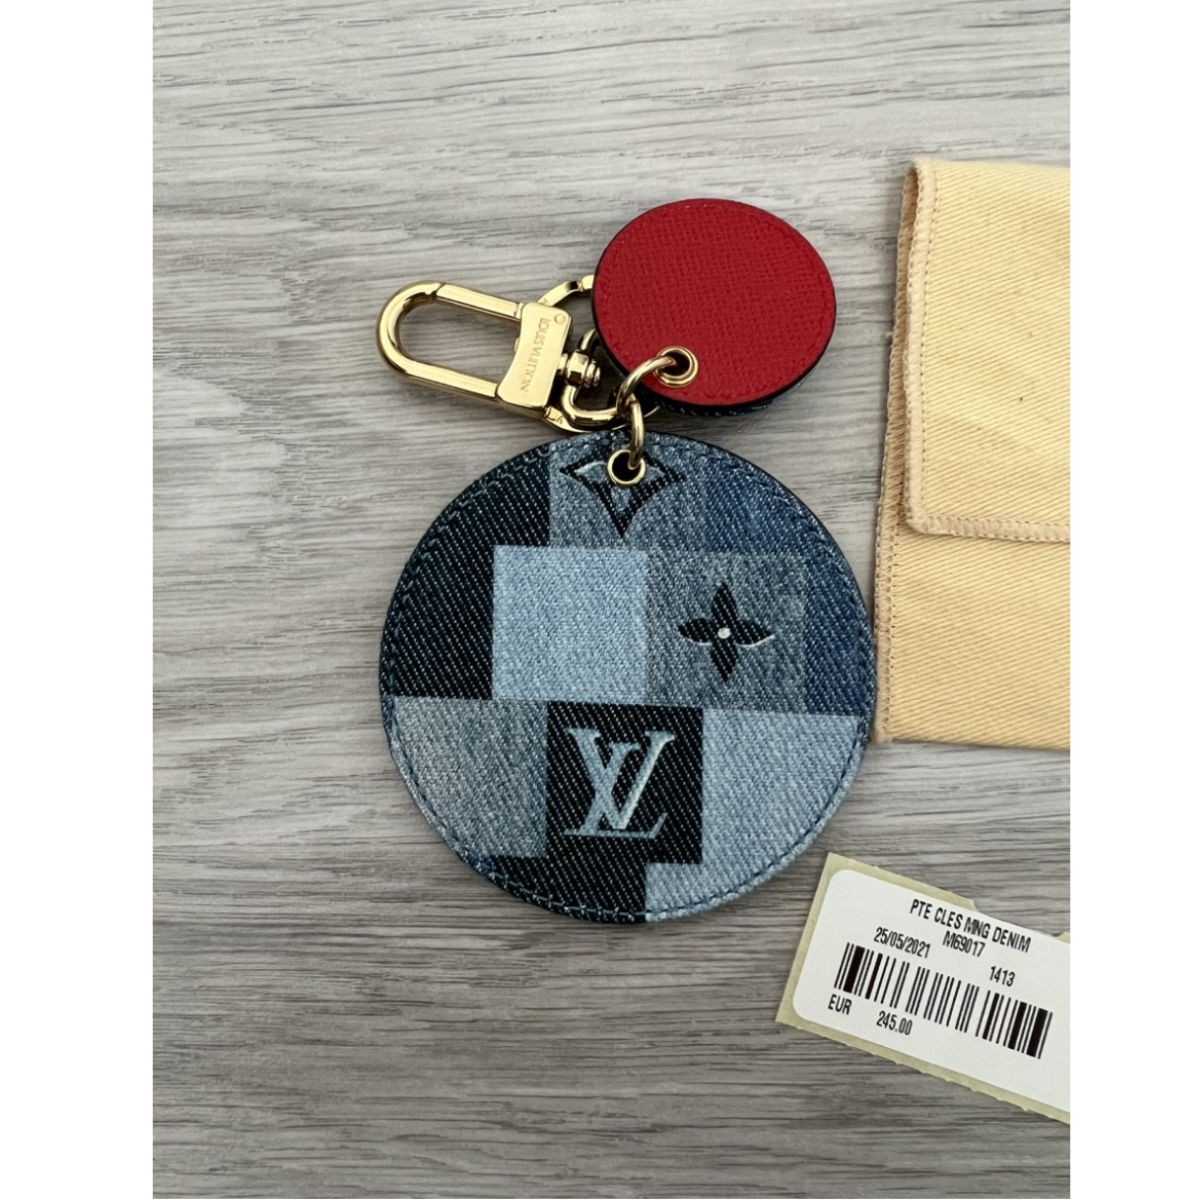 LOUIS VUITTON Sold Out! Red & Denim Patchwork Bag Charm/Key Holder-Receipt  BNIB!